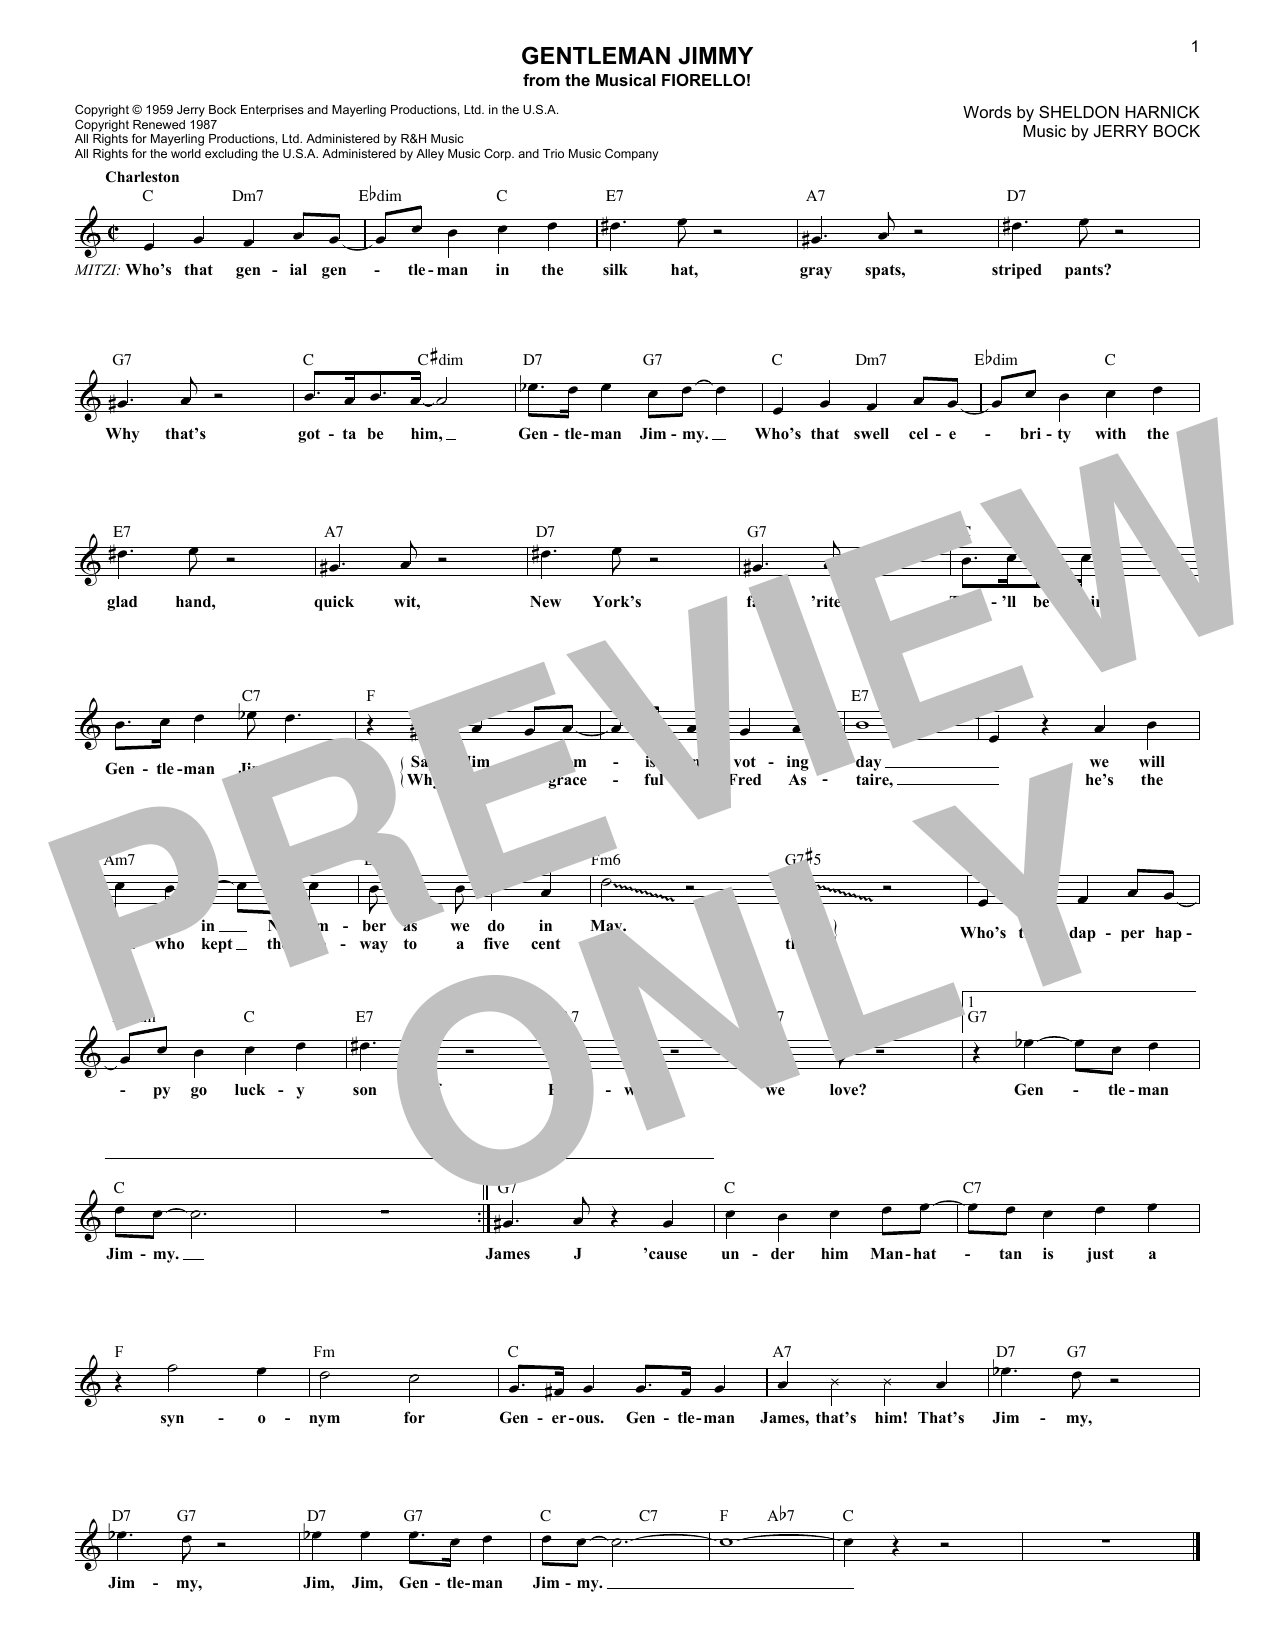 Sheldon Harnick Gentleman Jimmy Sheet Music Notes & Chords for Melody Line, Lyrics & Chords - Download or Print PDF